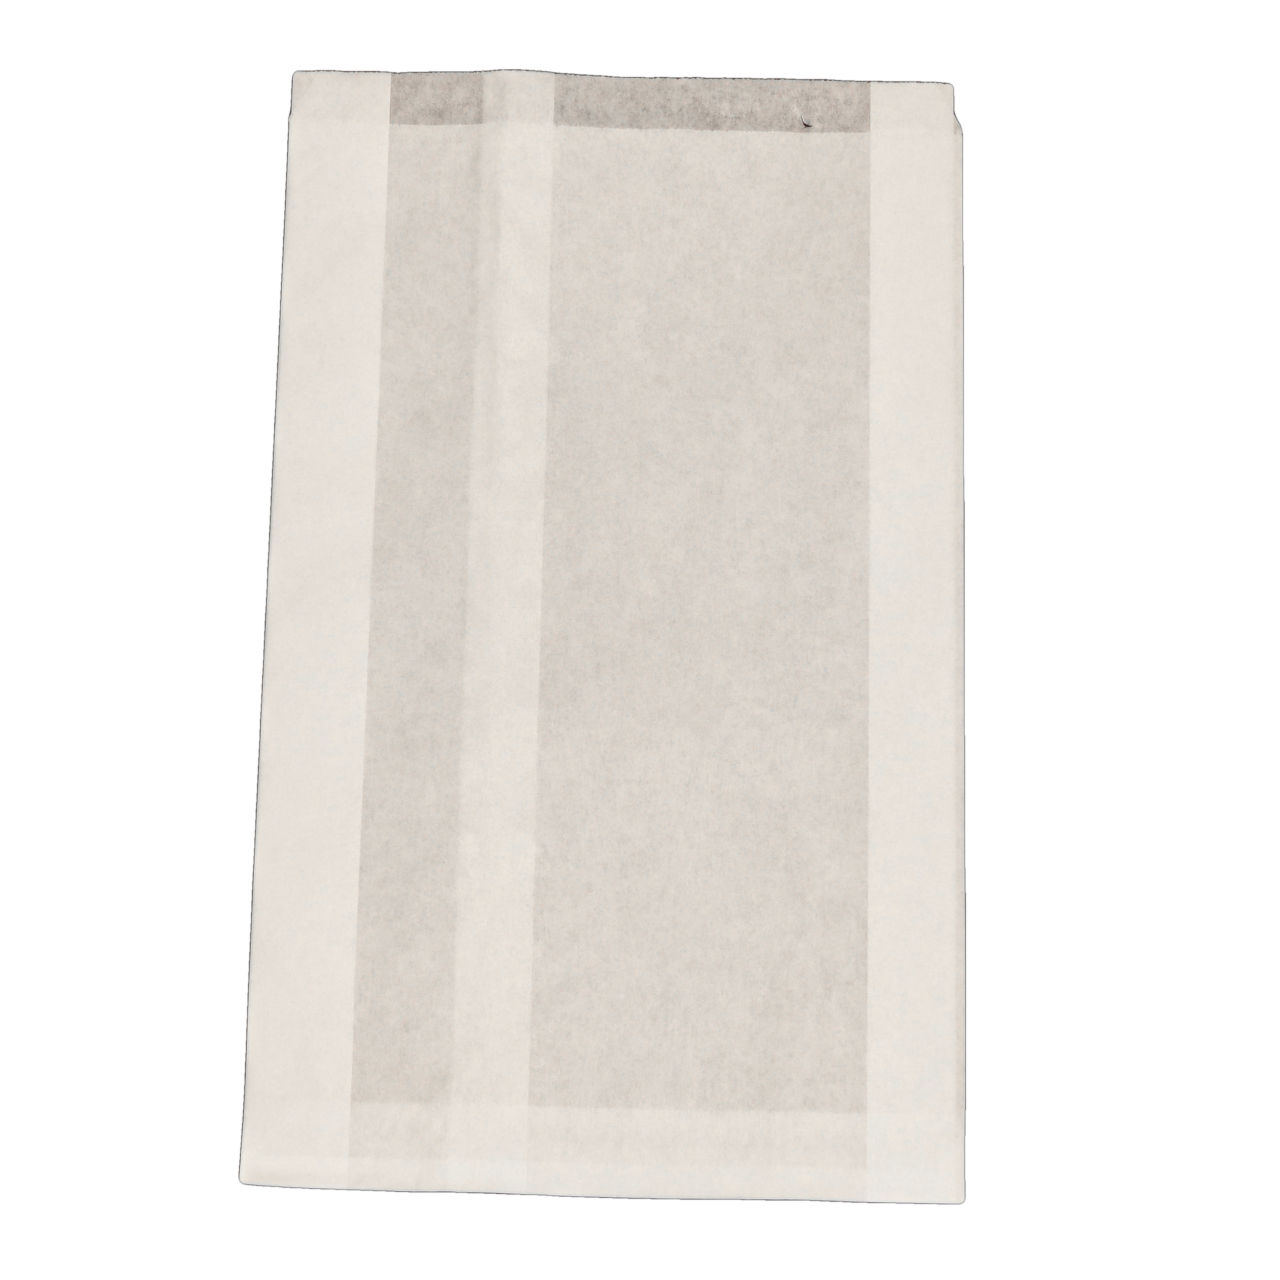 Faltenbeutel fettdicht, ca. 20 + 7 x 32 cm, weiß Pergament Ersatzpapier